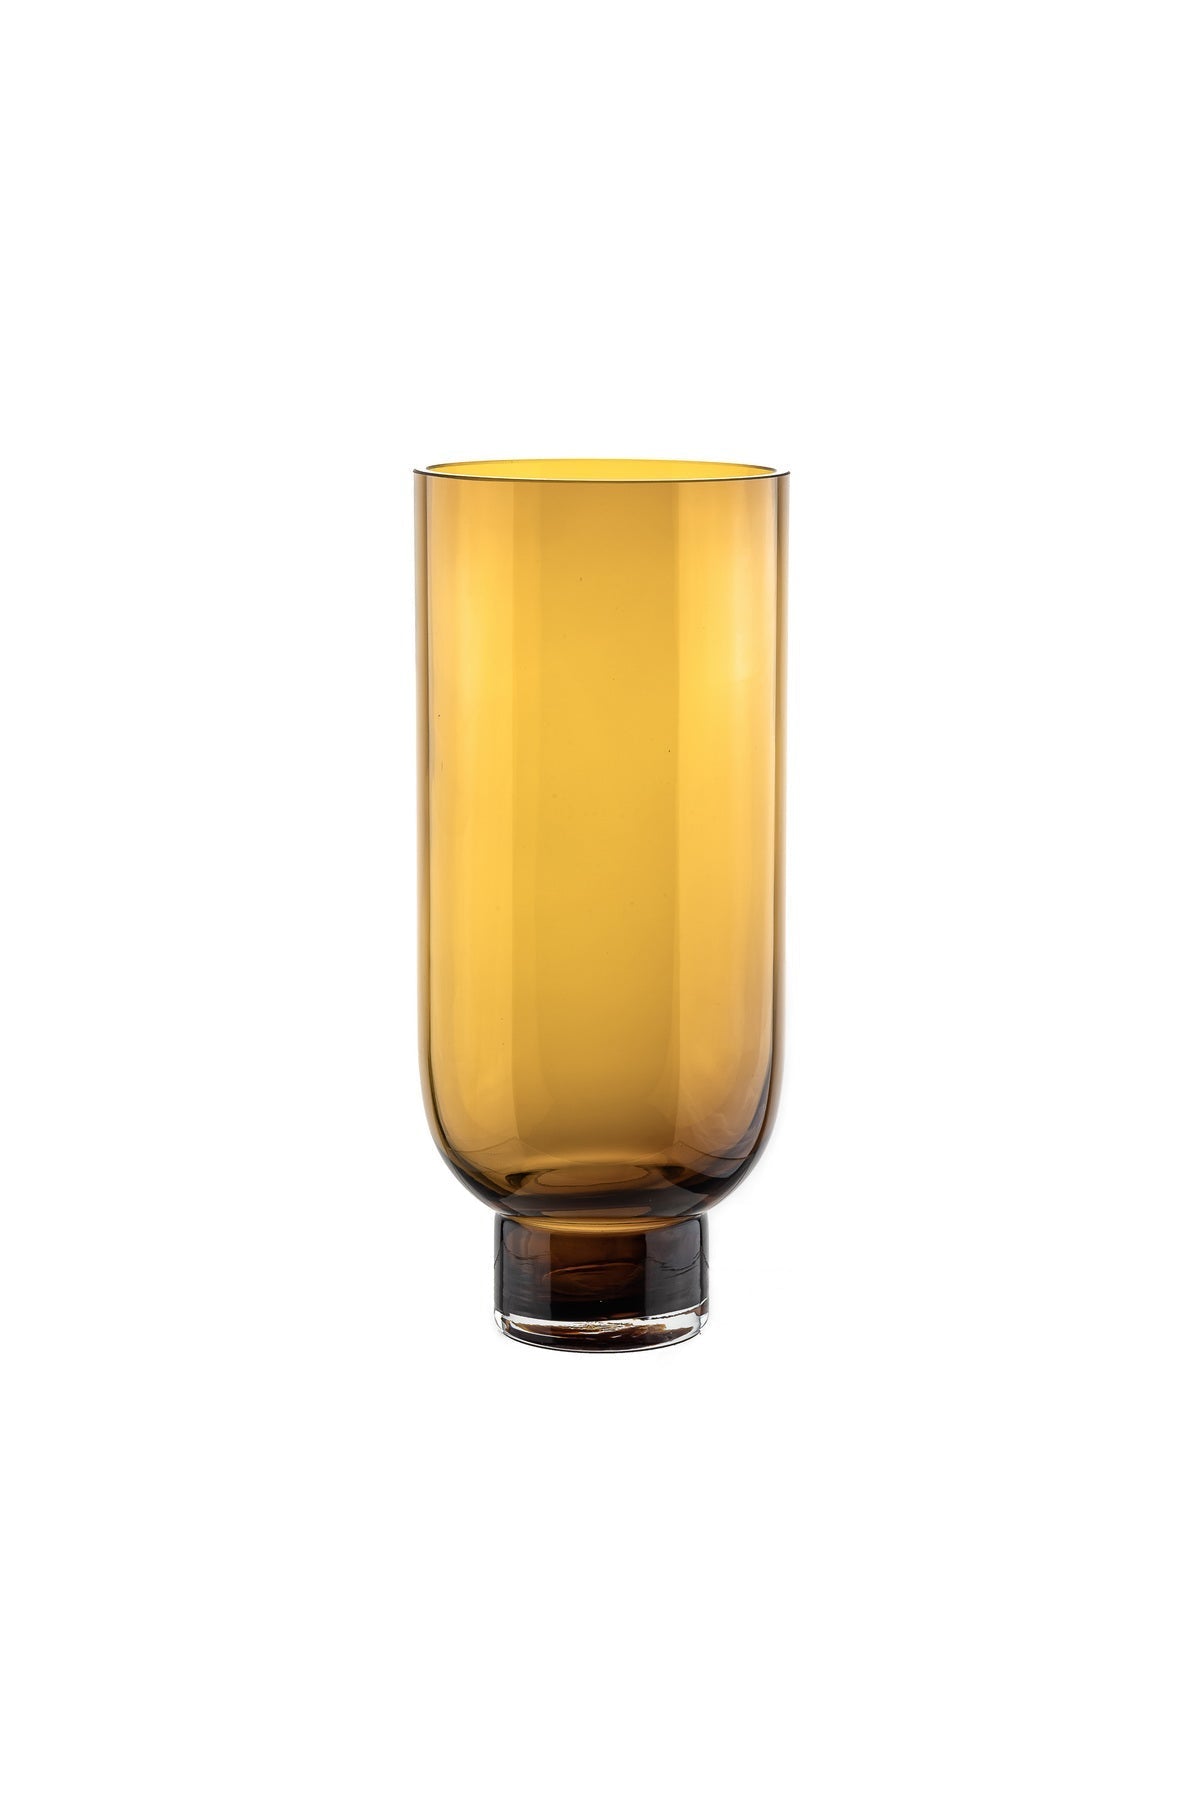 Sober modern glass vase, cylindrical shape on a solid base, warm dark